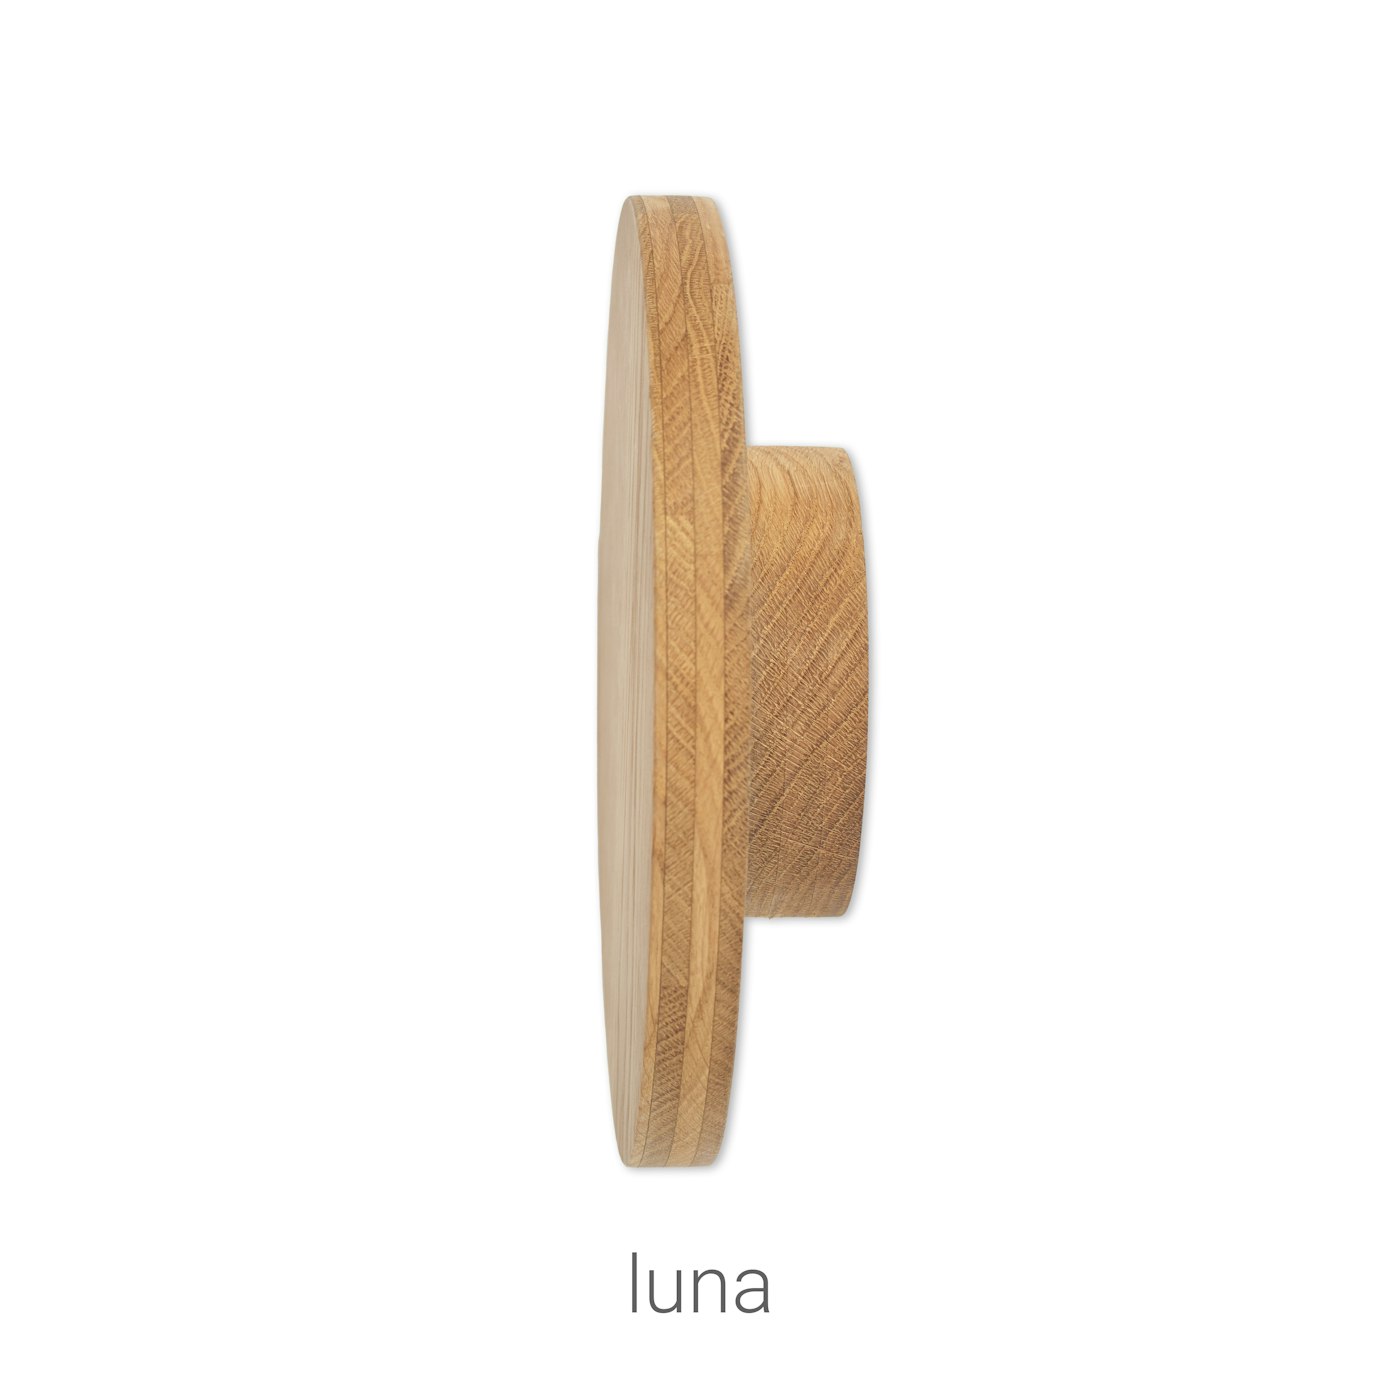 luna handle in oak